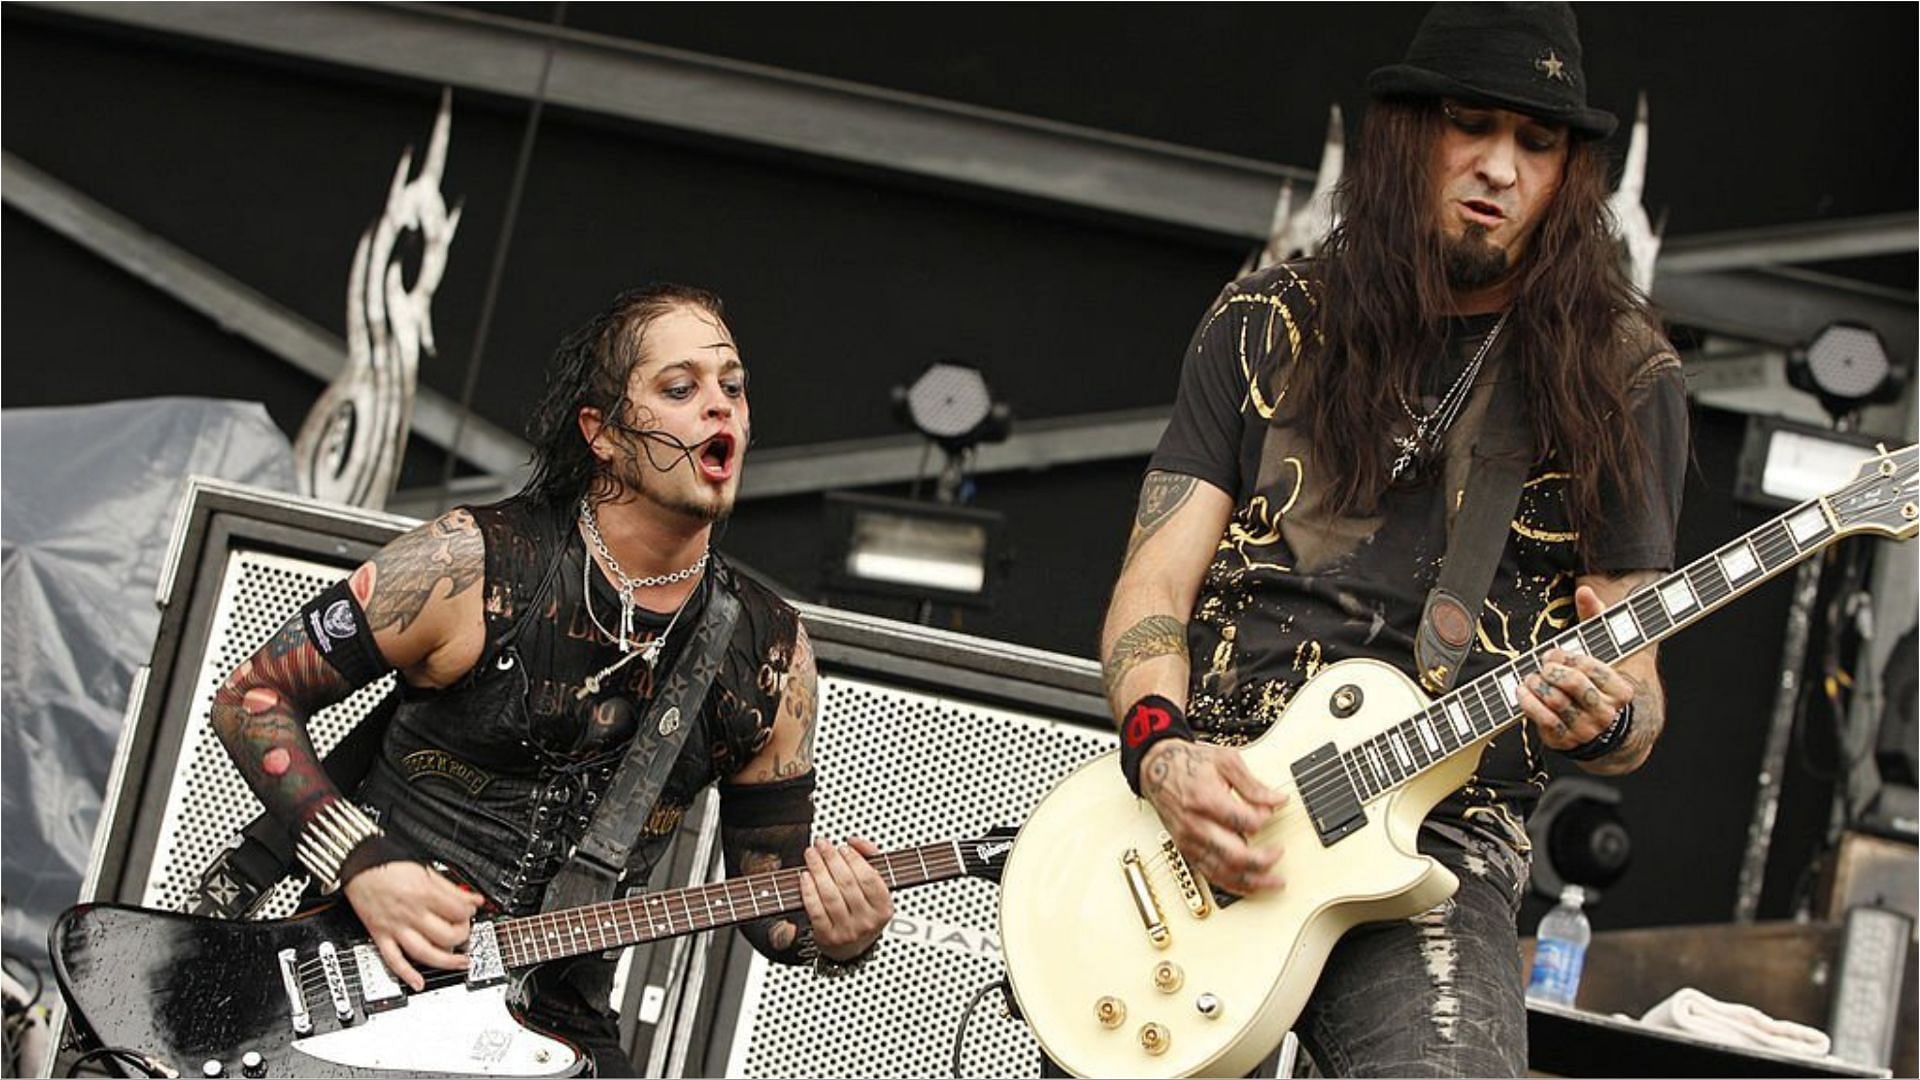 Jonathan Montoya and Wayne Swinny of Saliva perform during the 2009 Rock On The Range festival (Image via Barry Brecheisen/Getty Images)